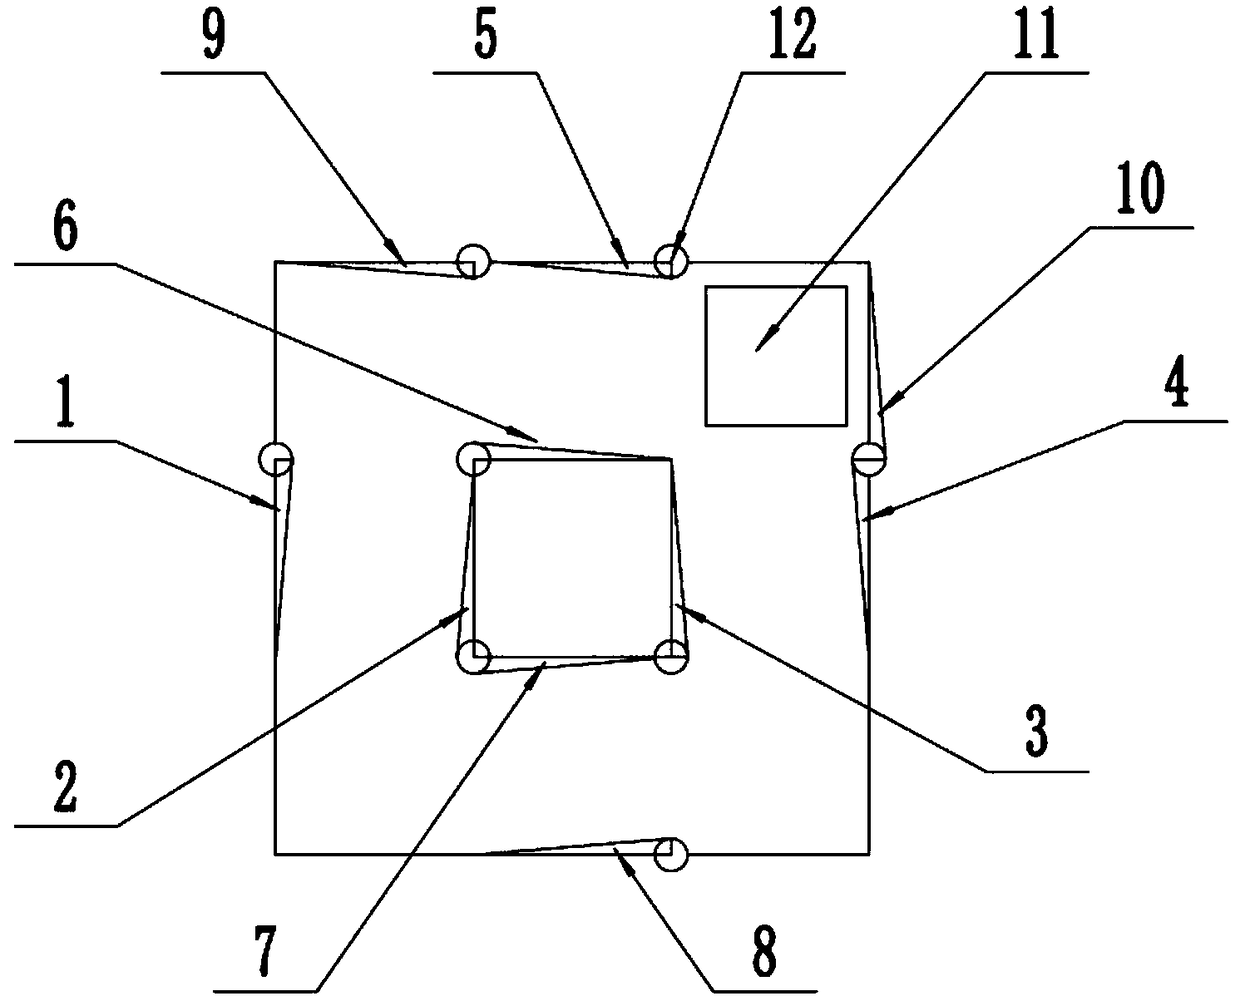 Big-data sheepfold based on nine rectangle grids